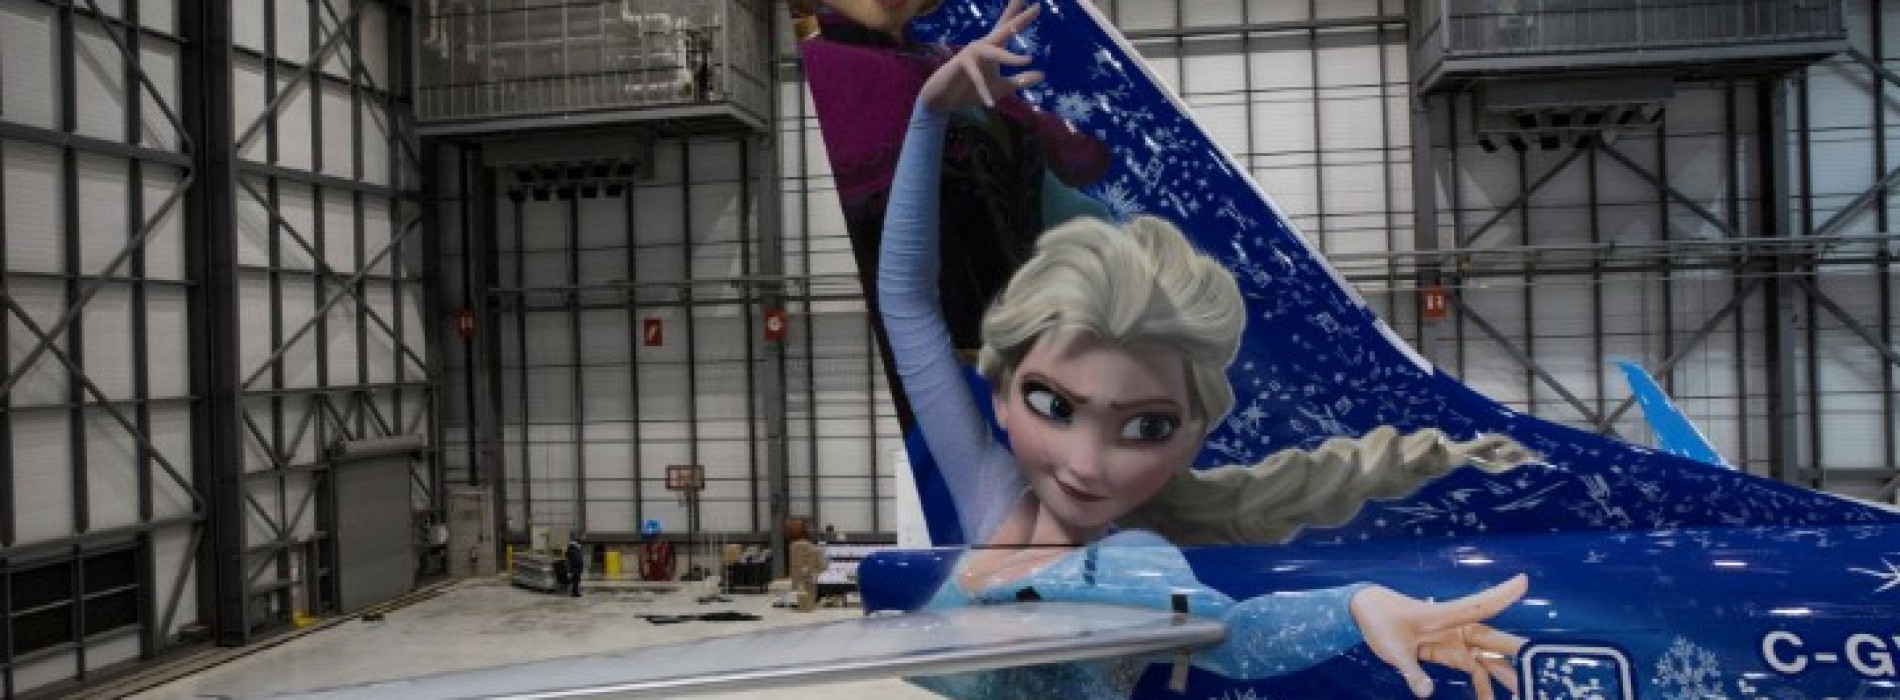 Frozen彩繪客機 ‧ WestJet有得搭